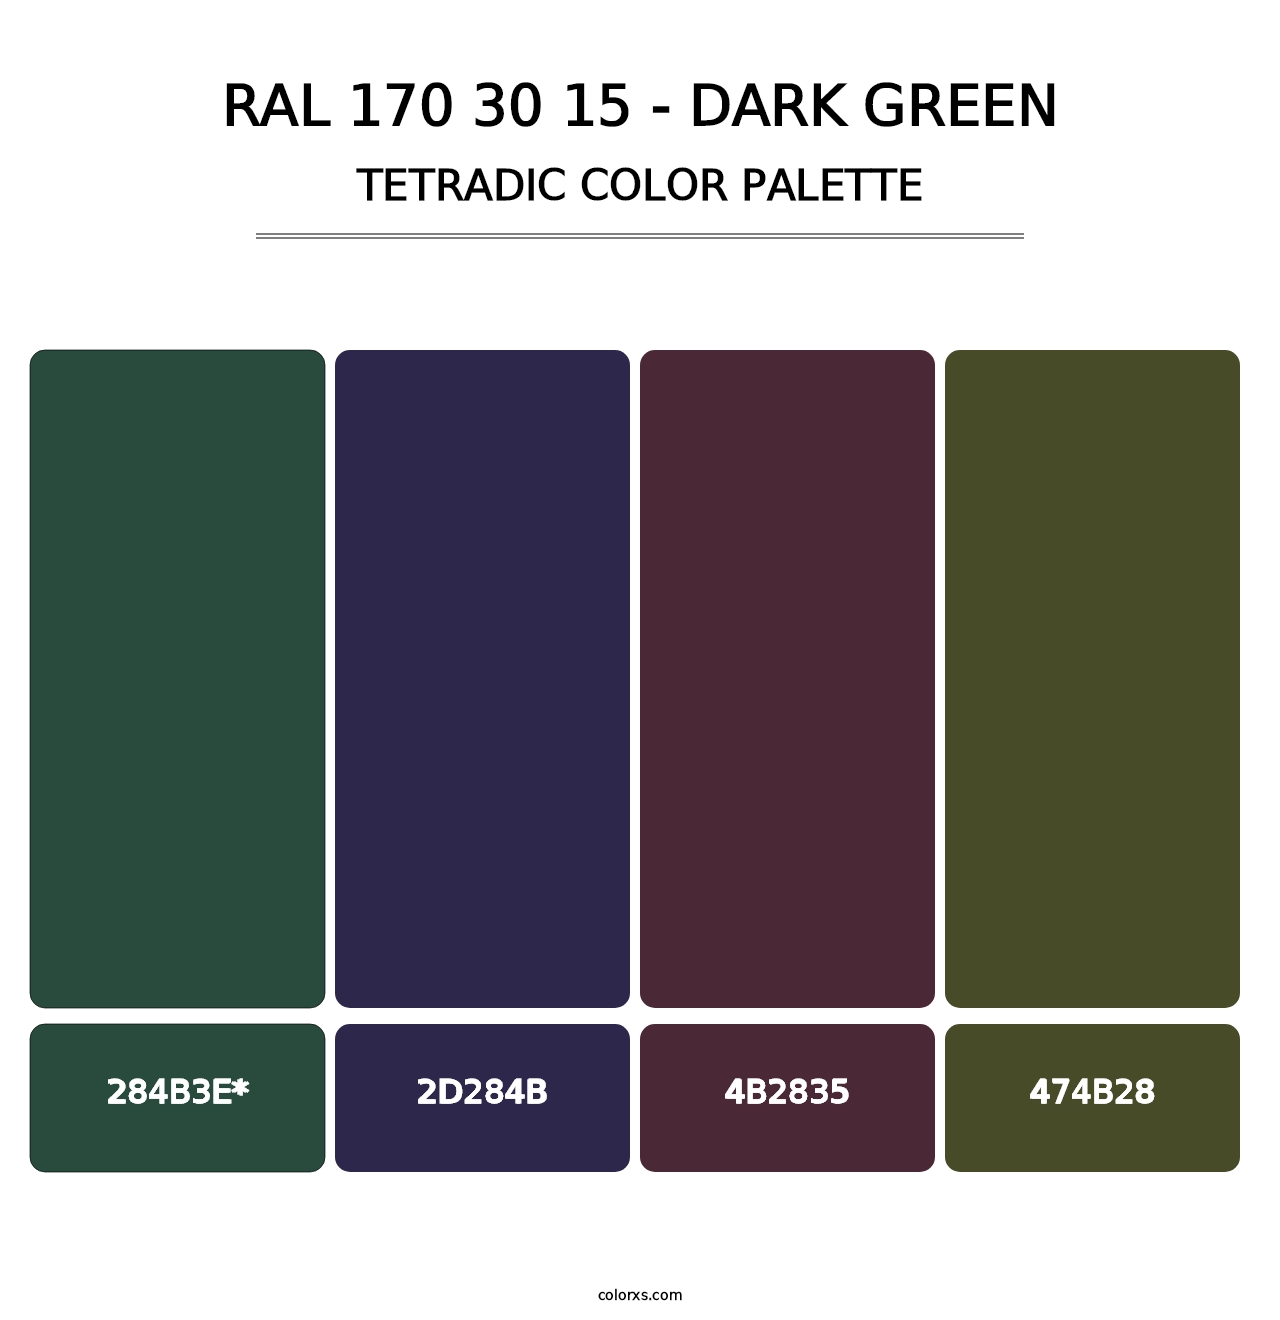 RAL 170 30 15 - Dark Green - Tetradic Color Palette